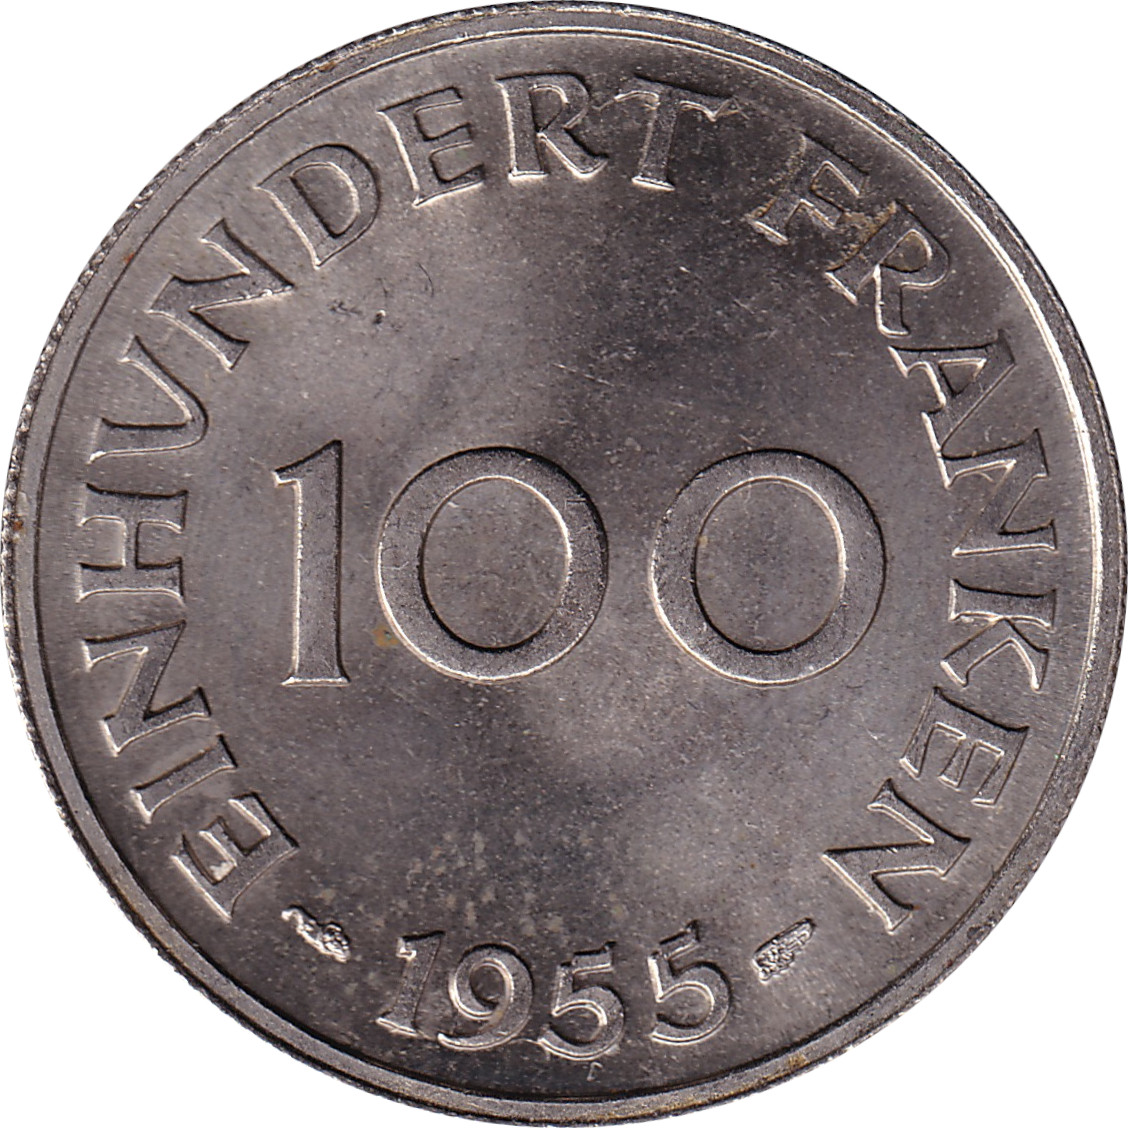 100 franken - Shield